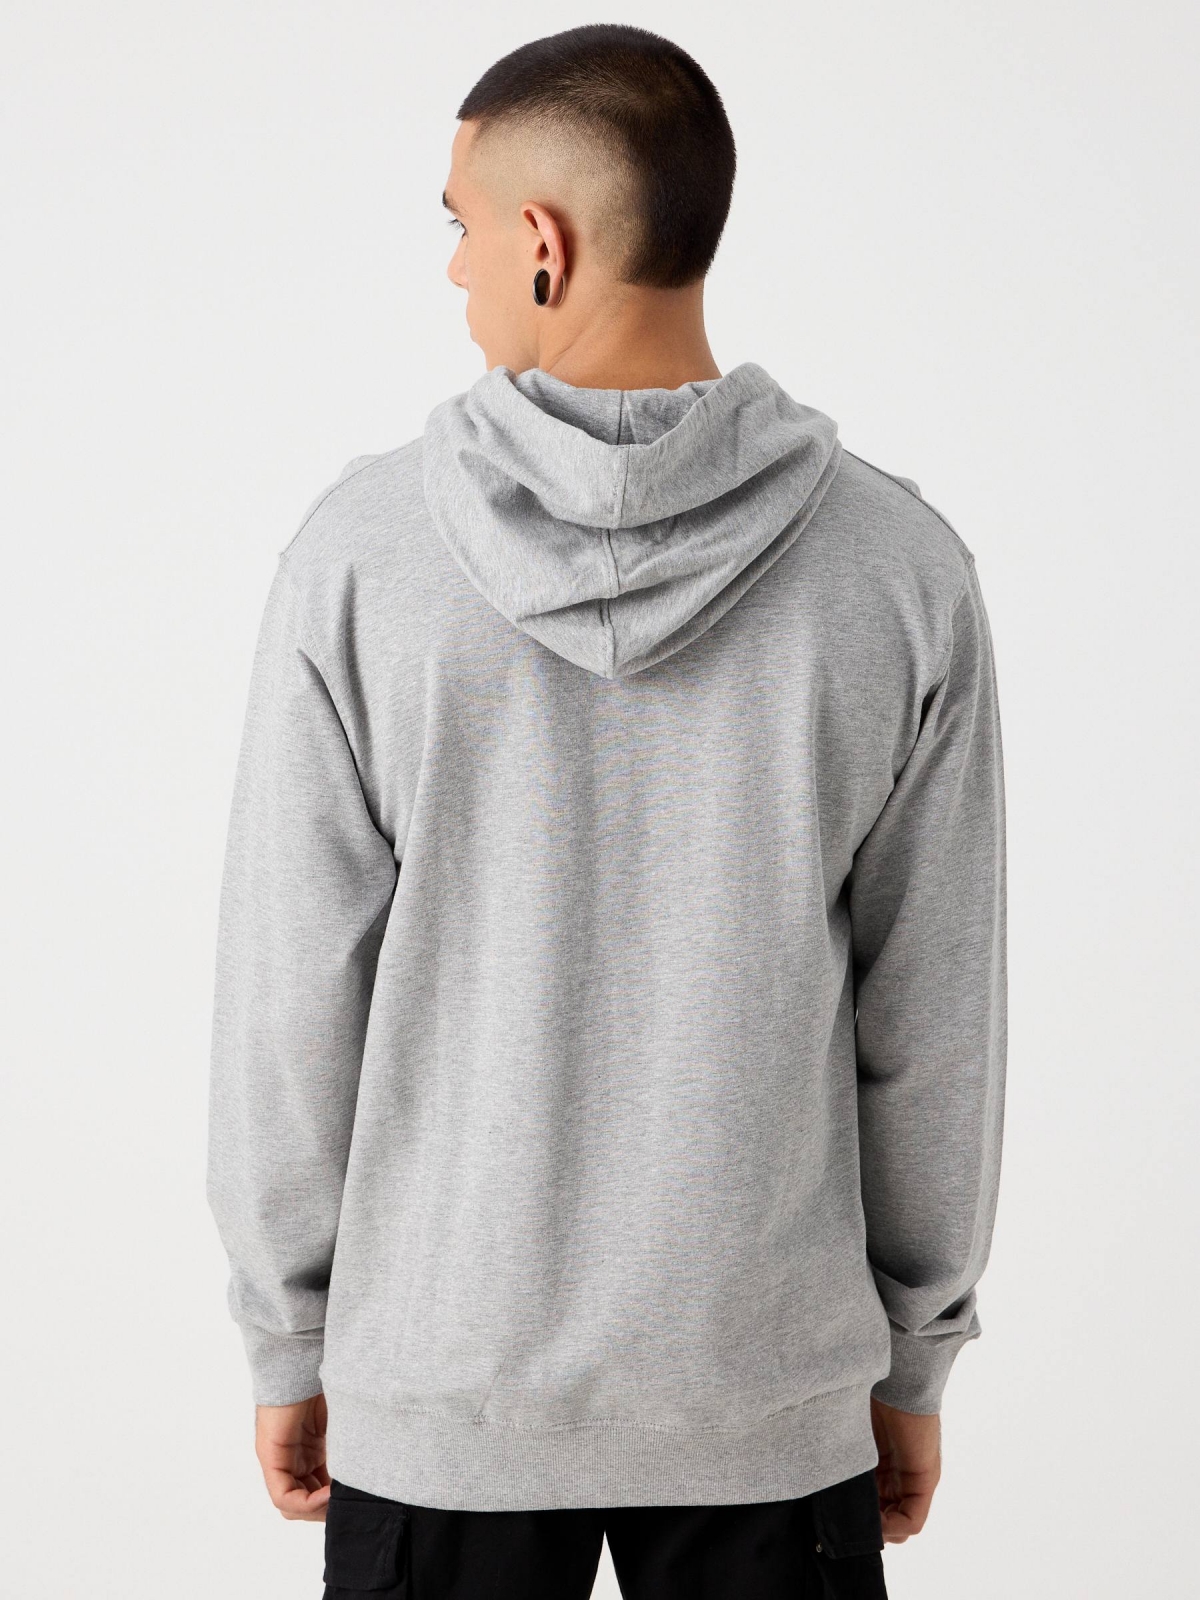 Kangaroo sweatshirt with logo melange grey middle back view